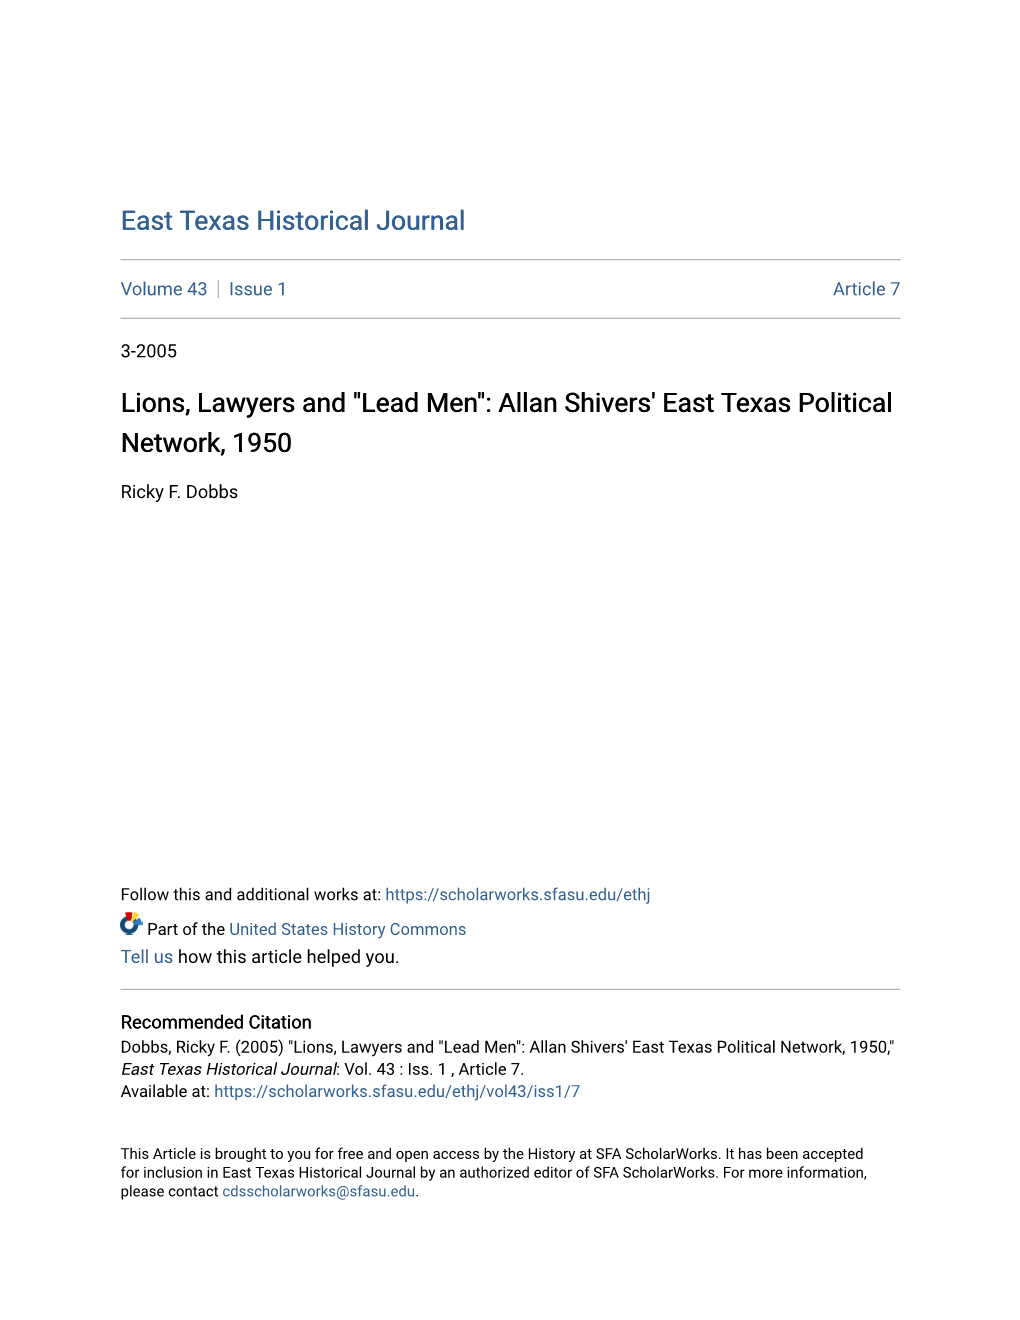 Allan Shivers' East Texas Political Network, 1950